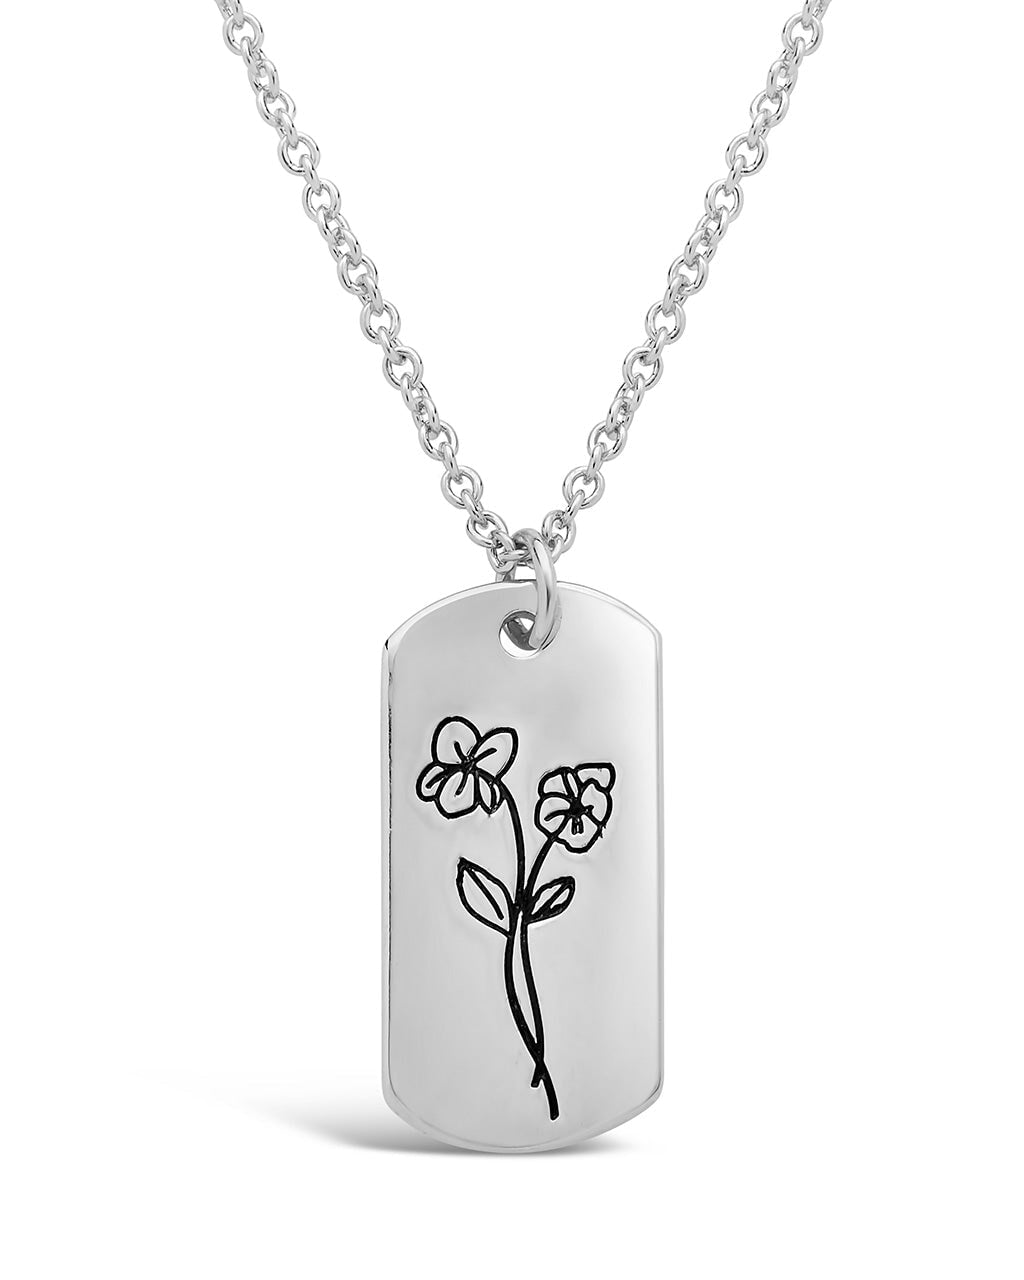 Birth Flower Pendant Necklace Sterling Forever Silver February / Violet 